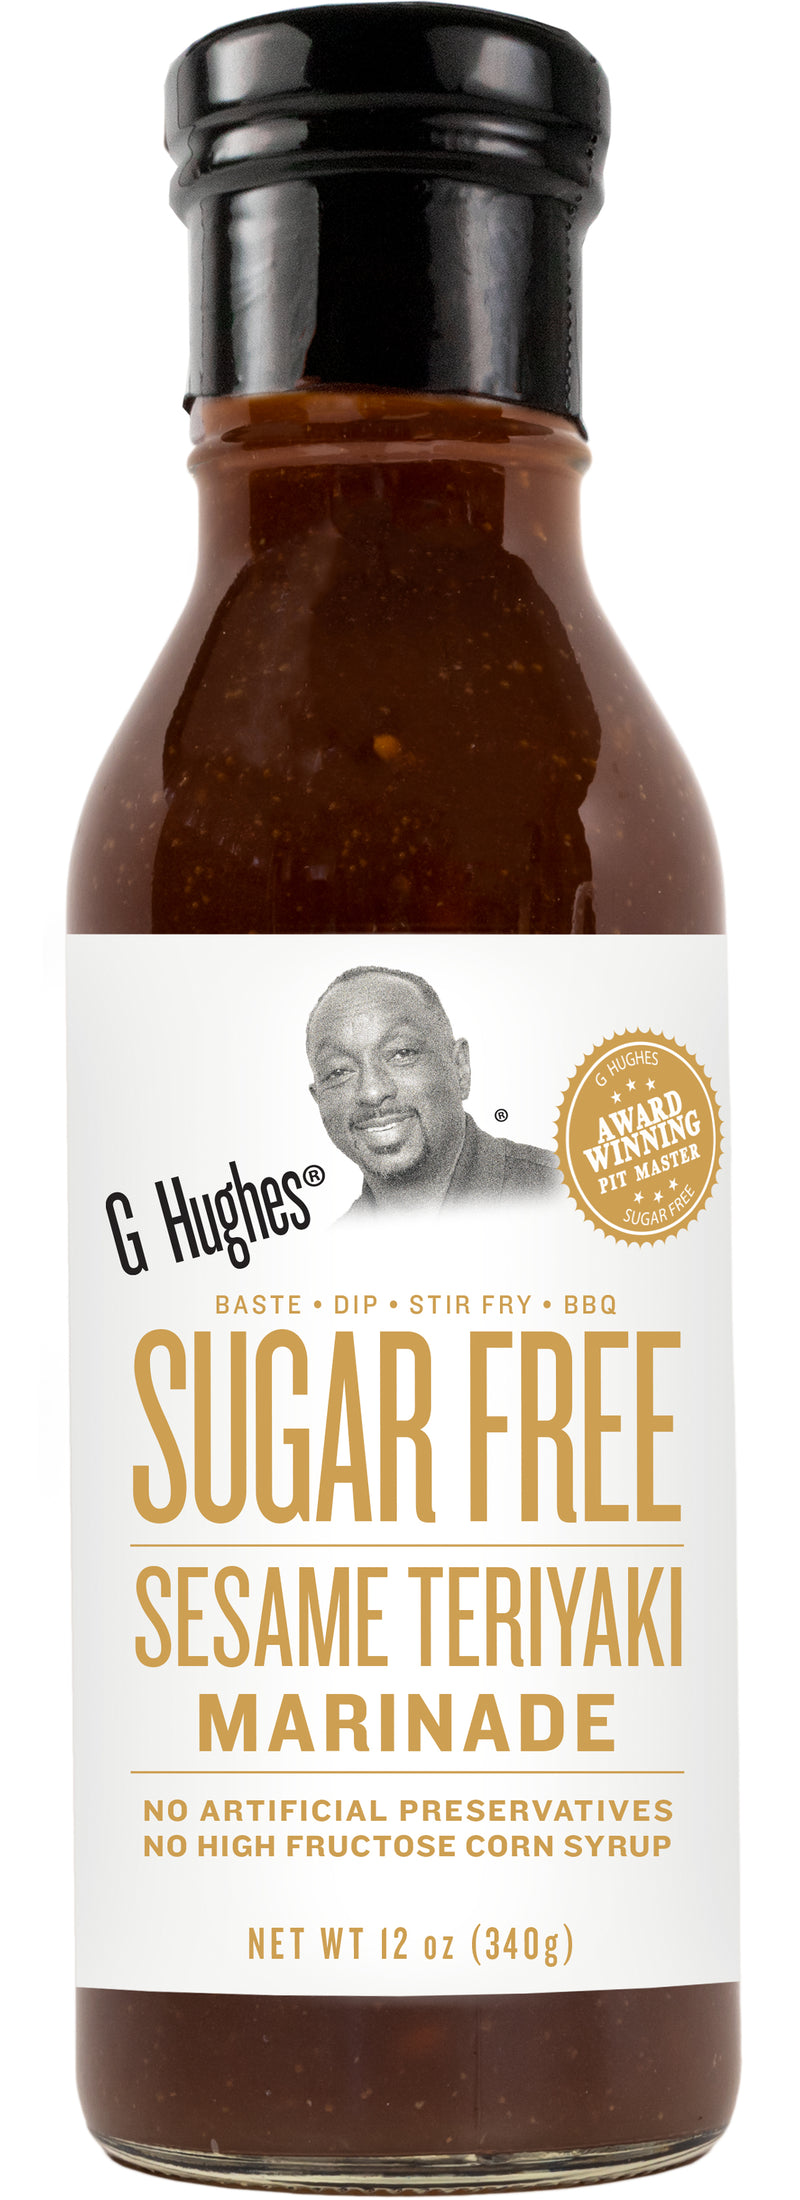 G Hughes' Sugar-Free Marinade - Sesame Teriyaki